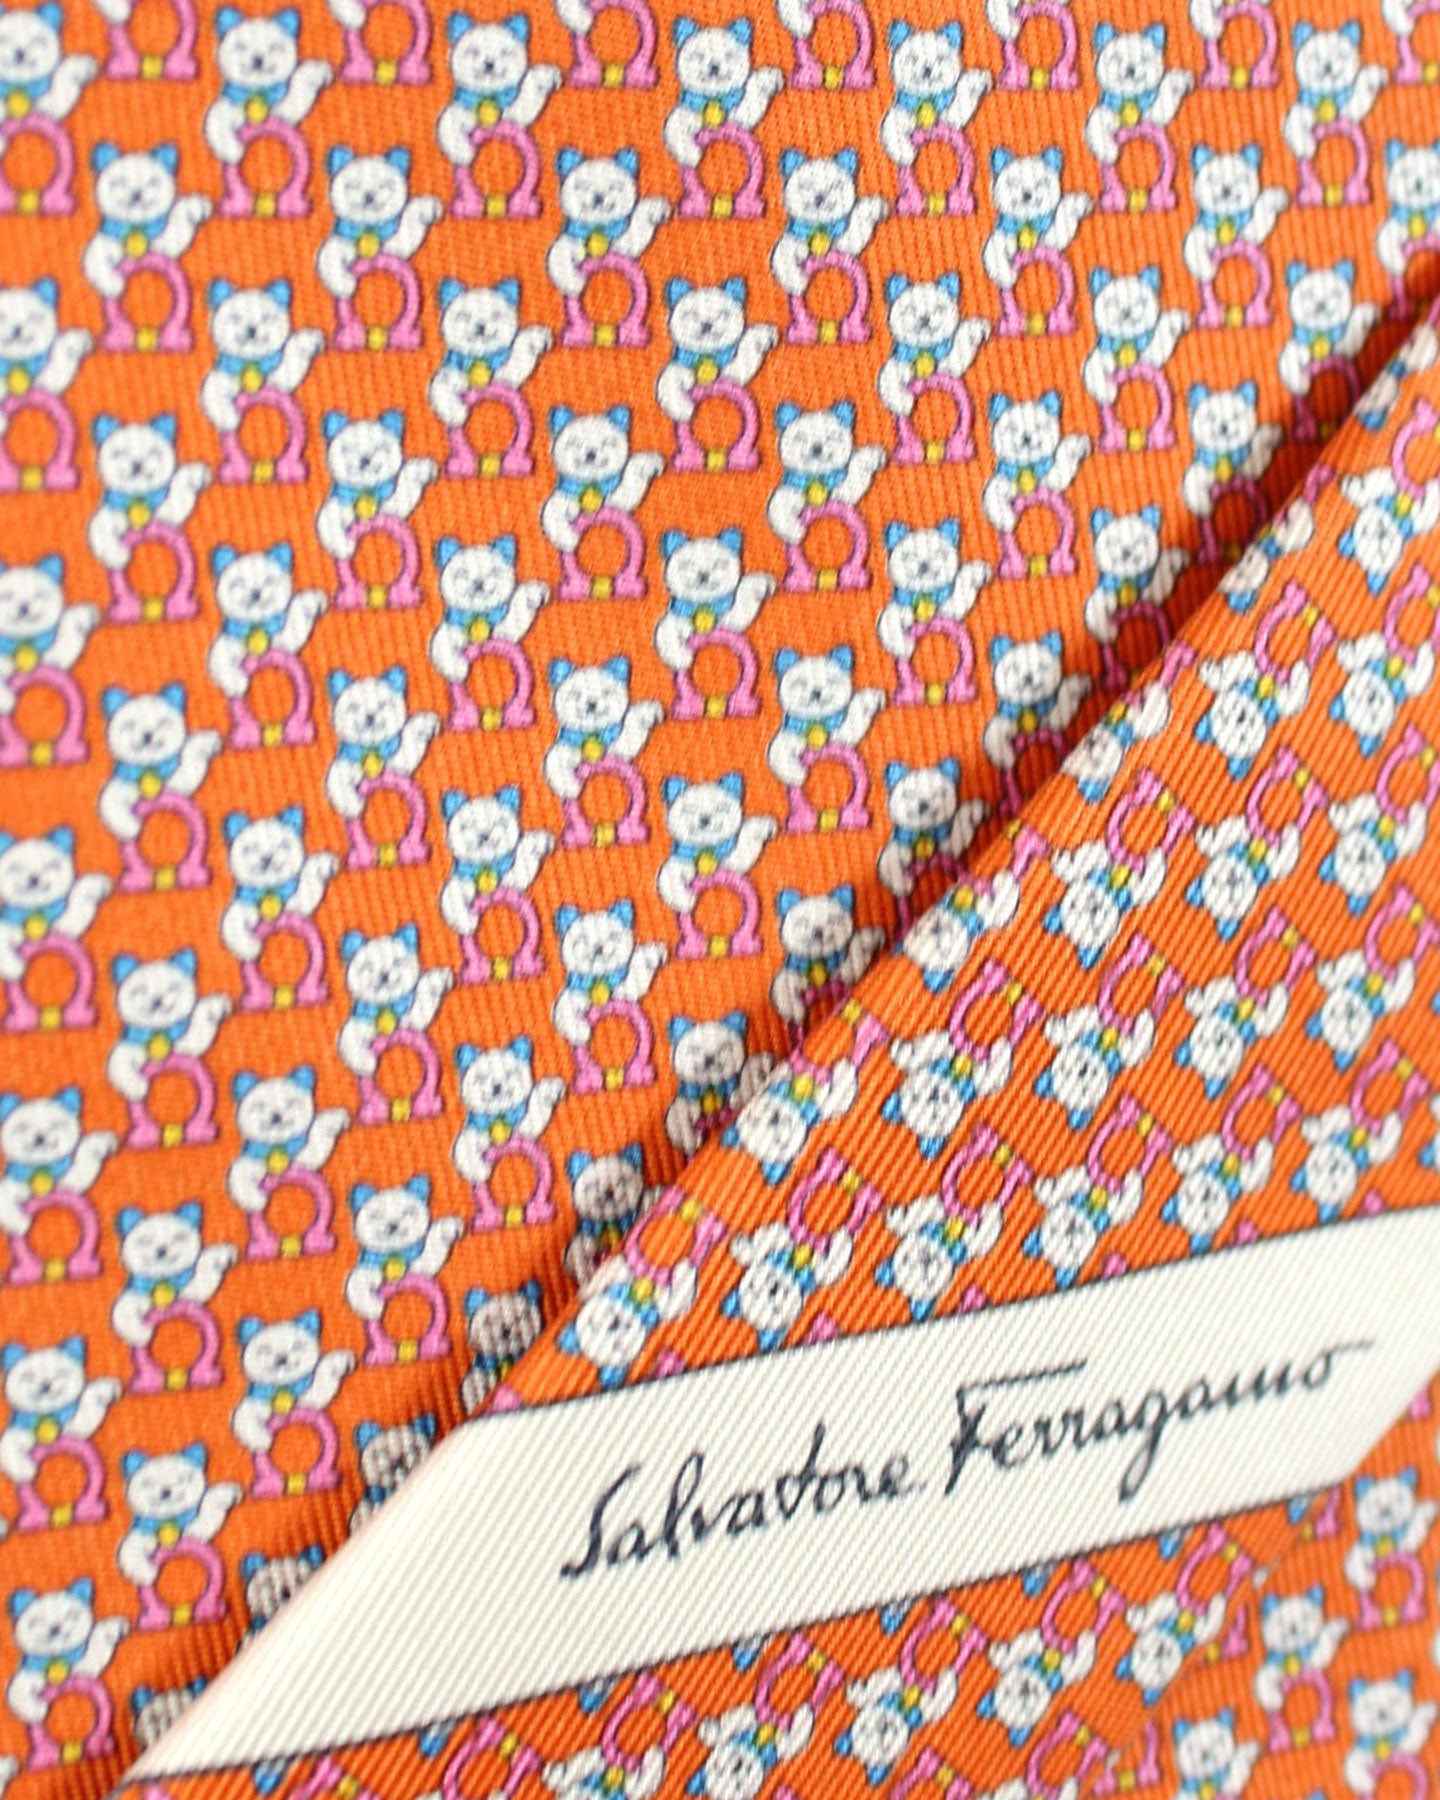 Salvatore Ferragamo Tie Orange Cat Gancini - Novelty